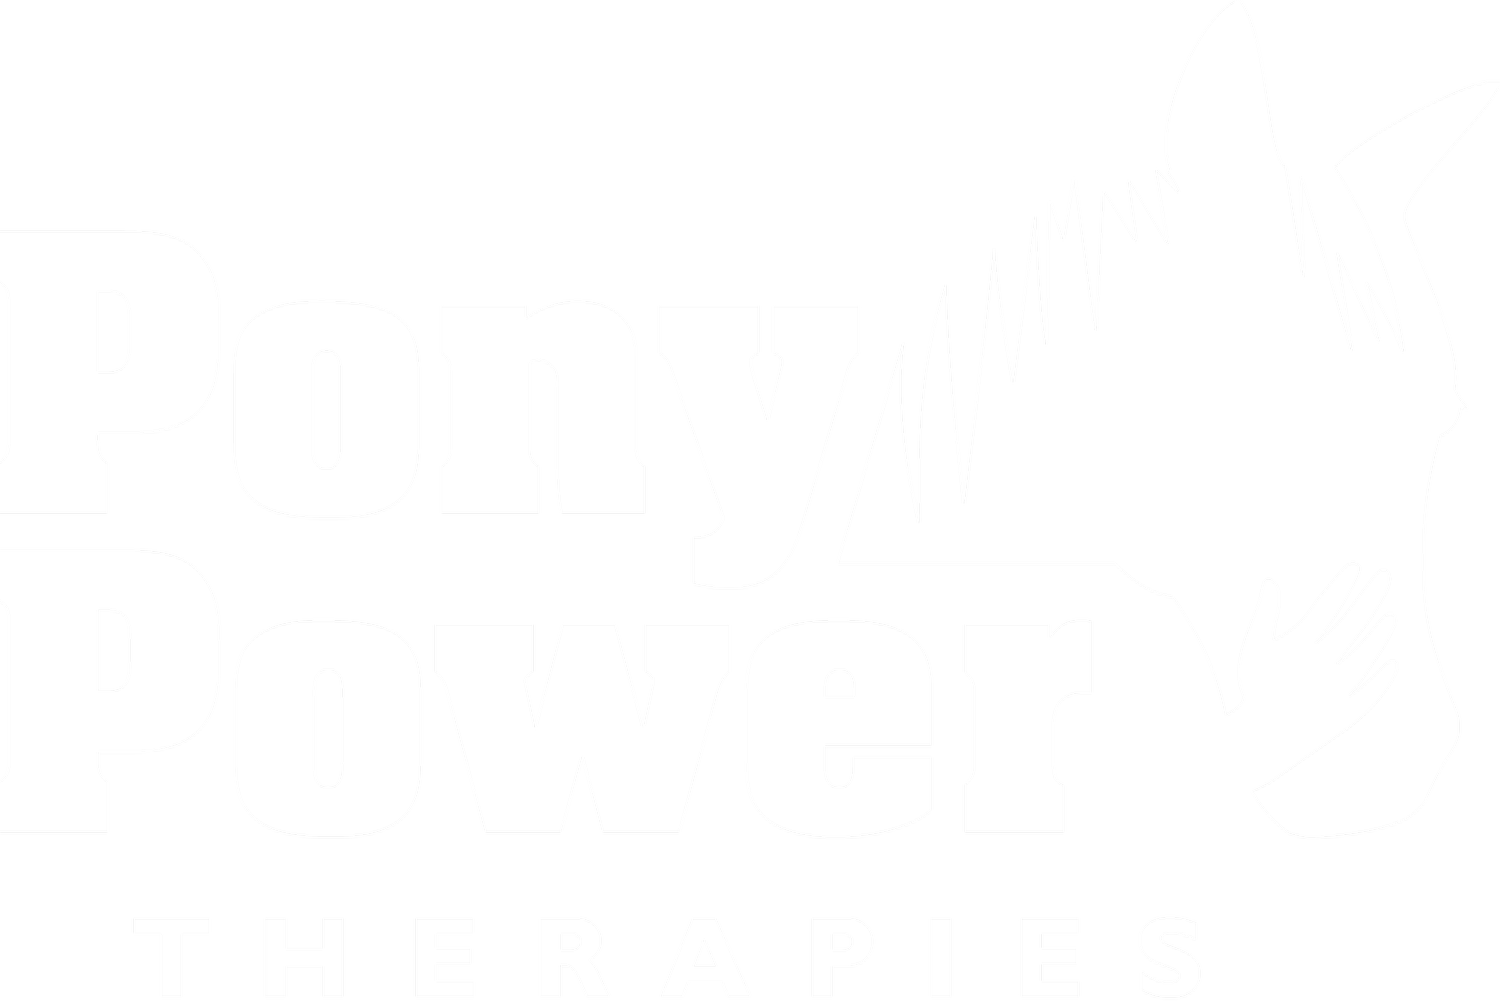 Pony Power Therapies